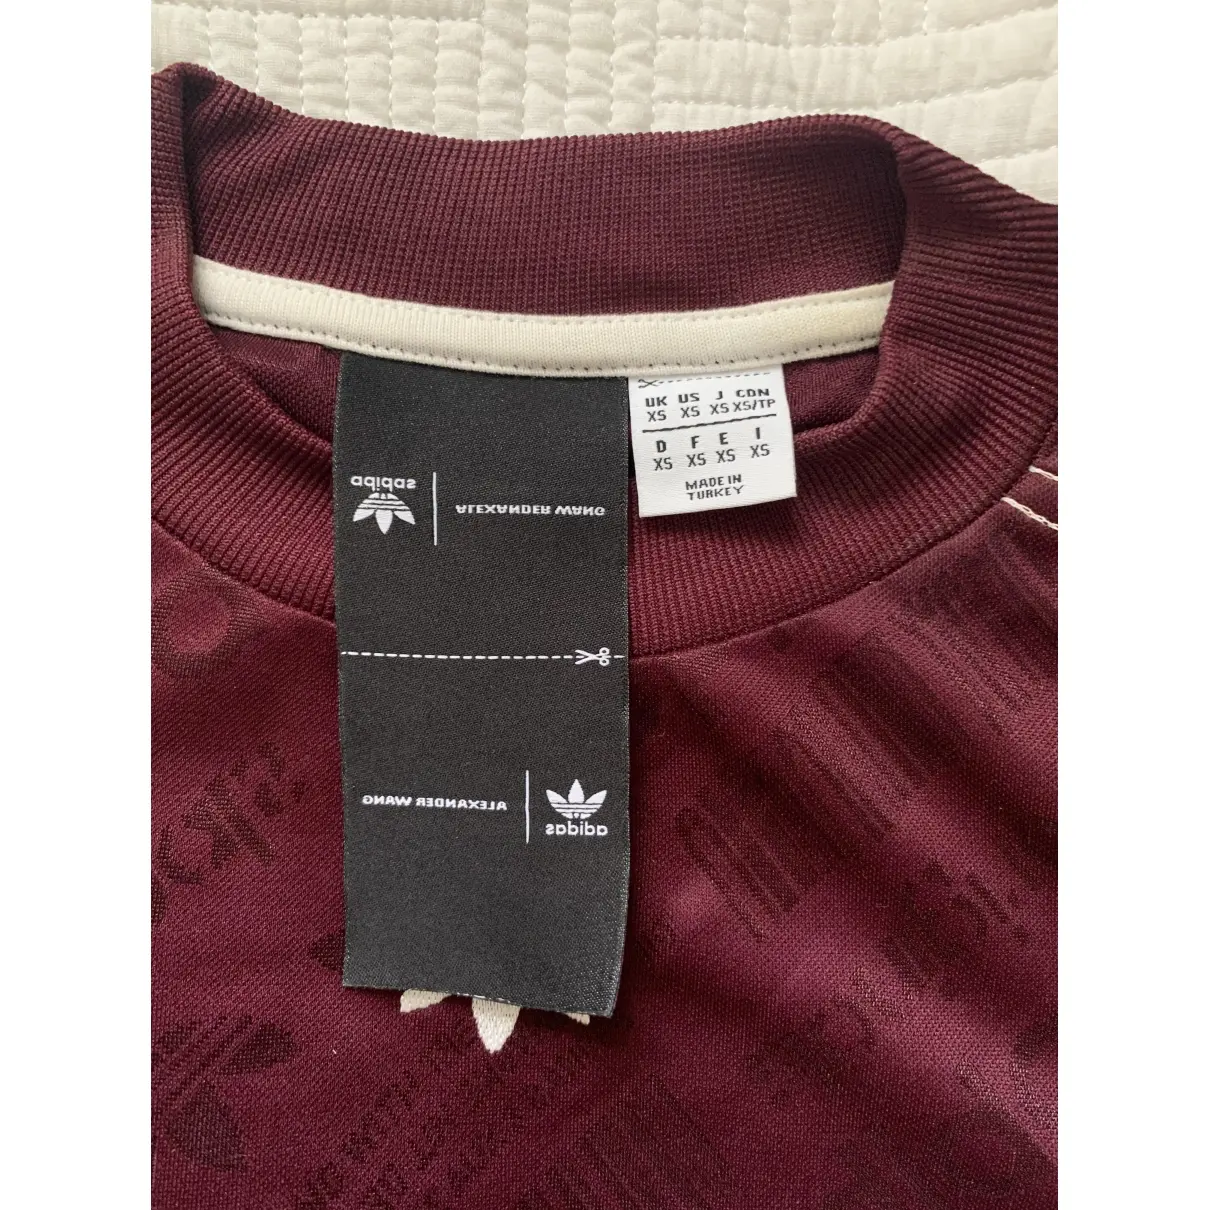 Buy Adidas Originals x Alexander Wang Burgundy Polyester Top online